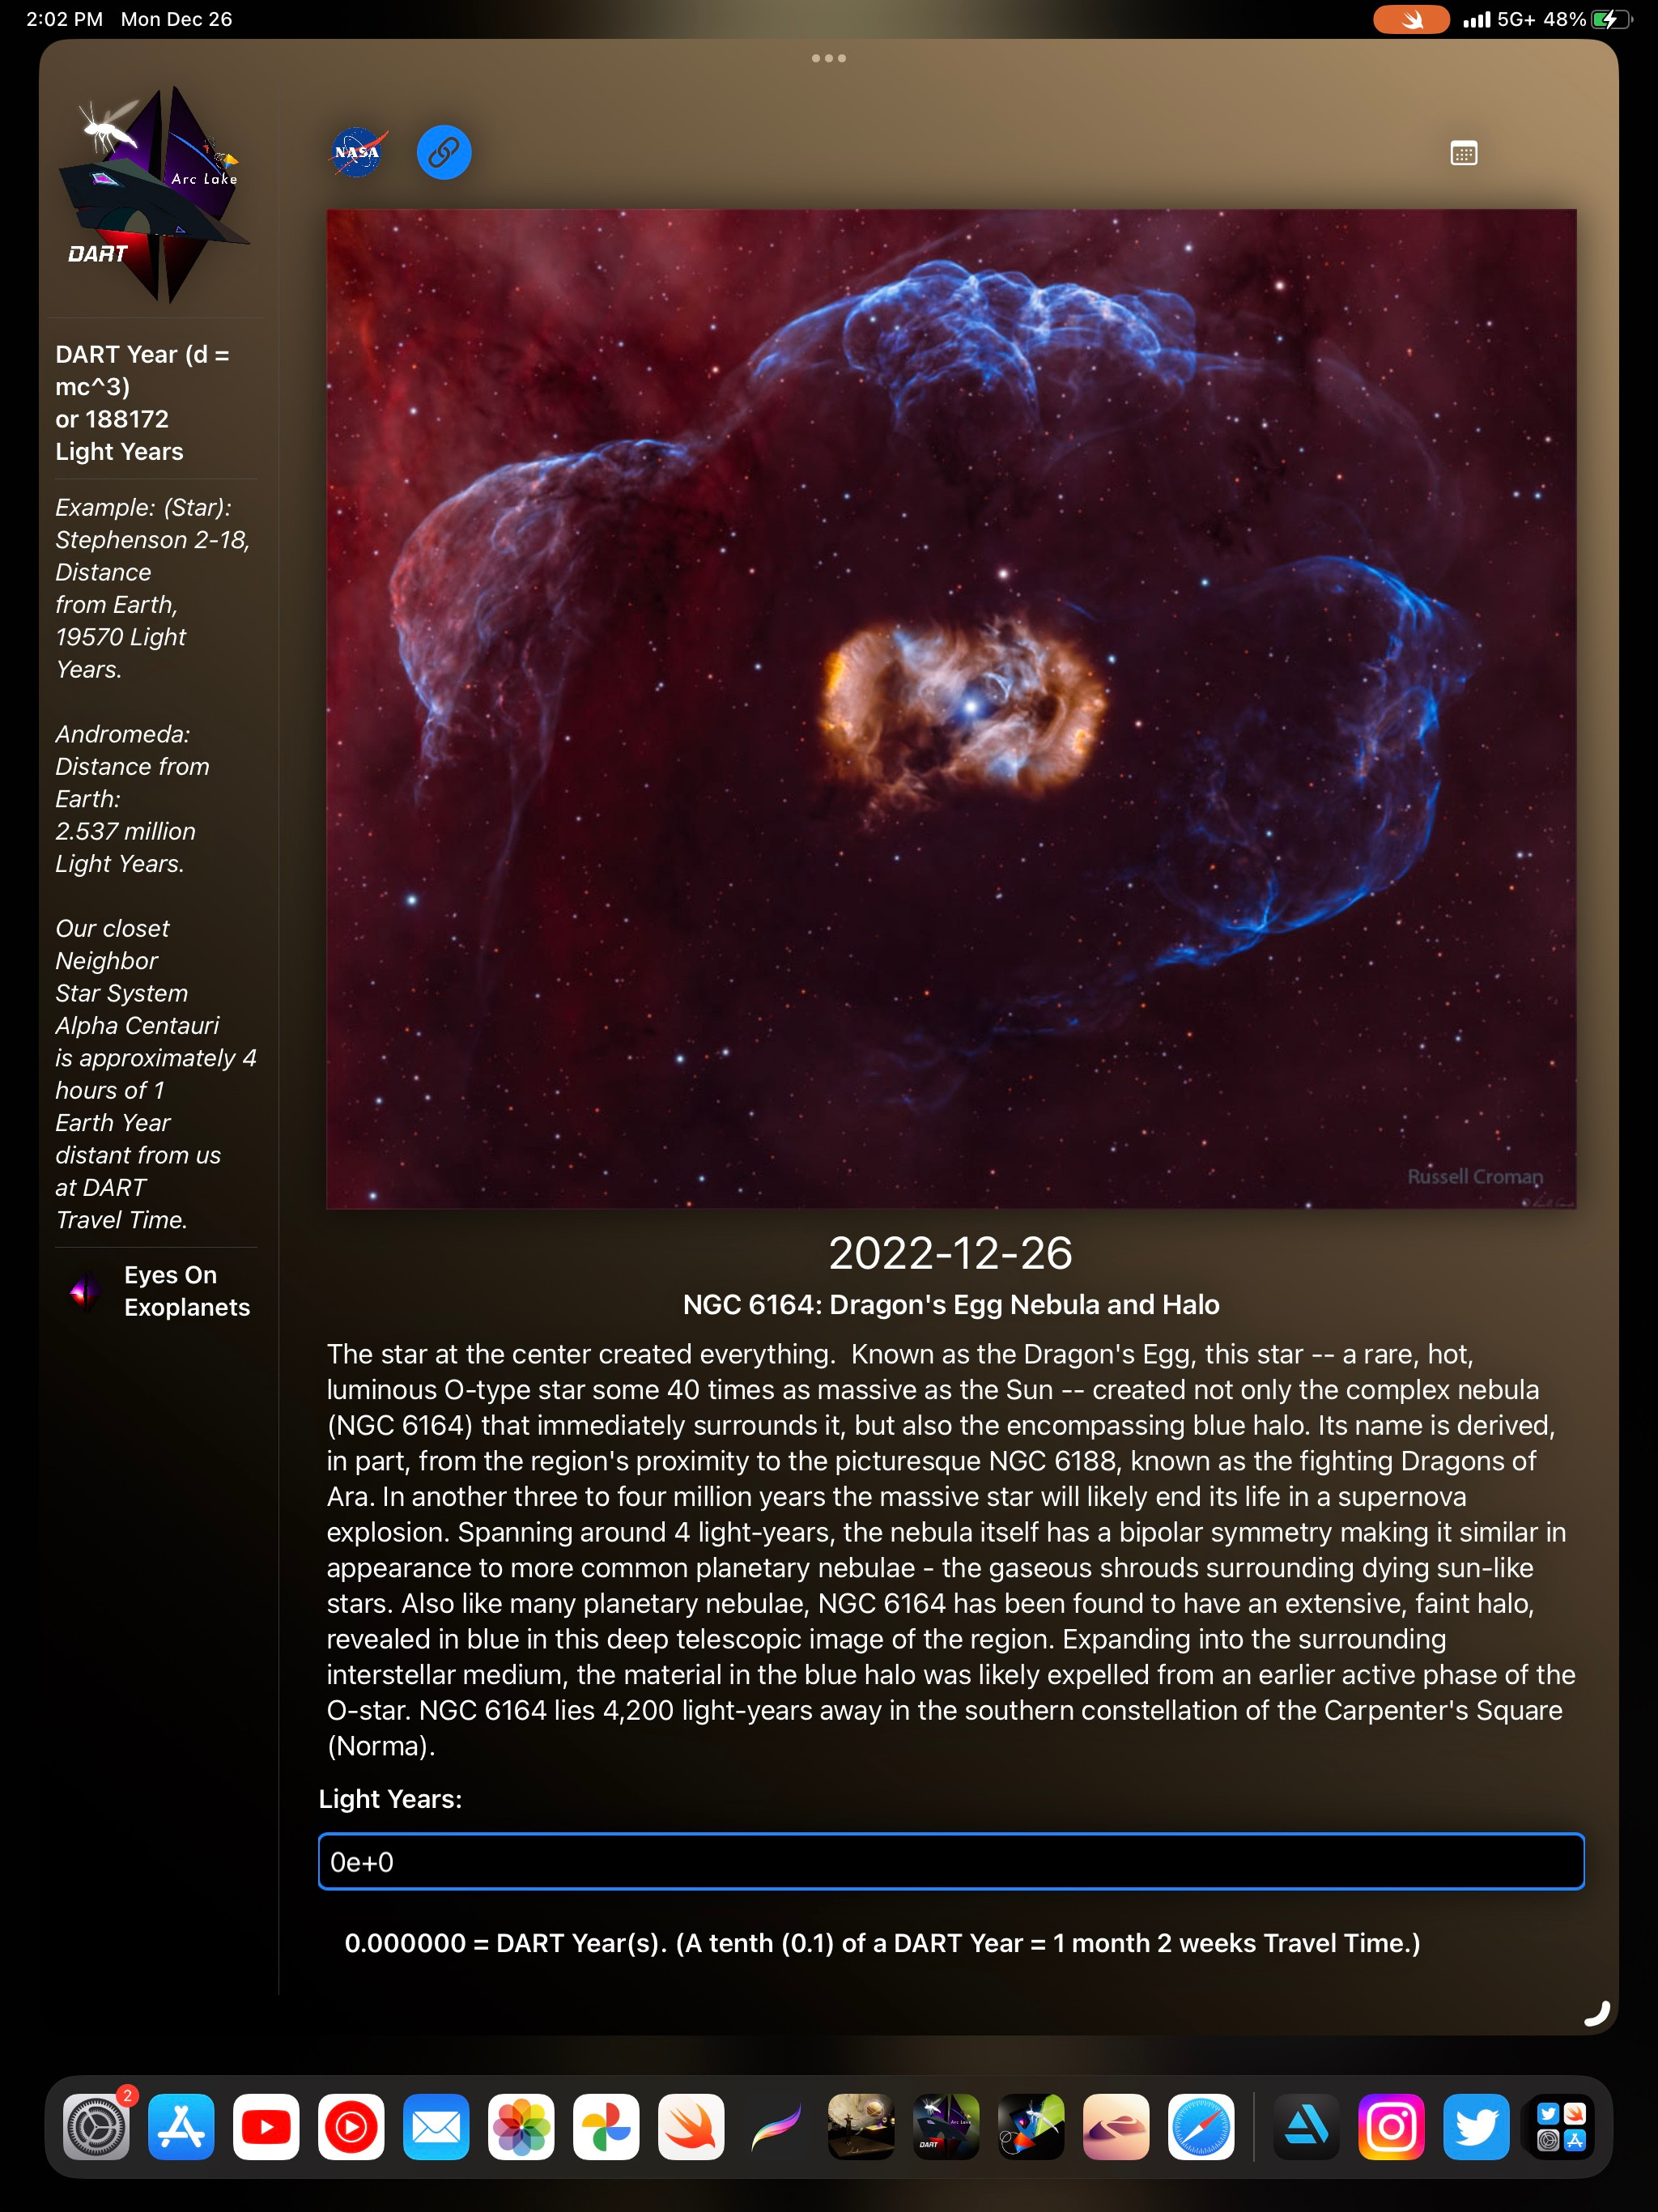 Arc Lake DART, NASA Astronomy Image of the Day. iPad. v1.0.4 Update.